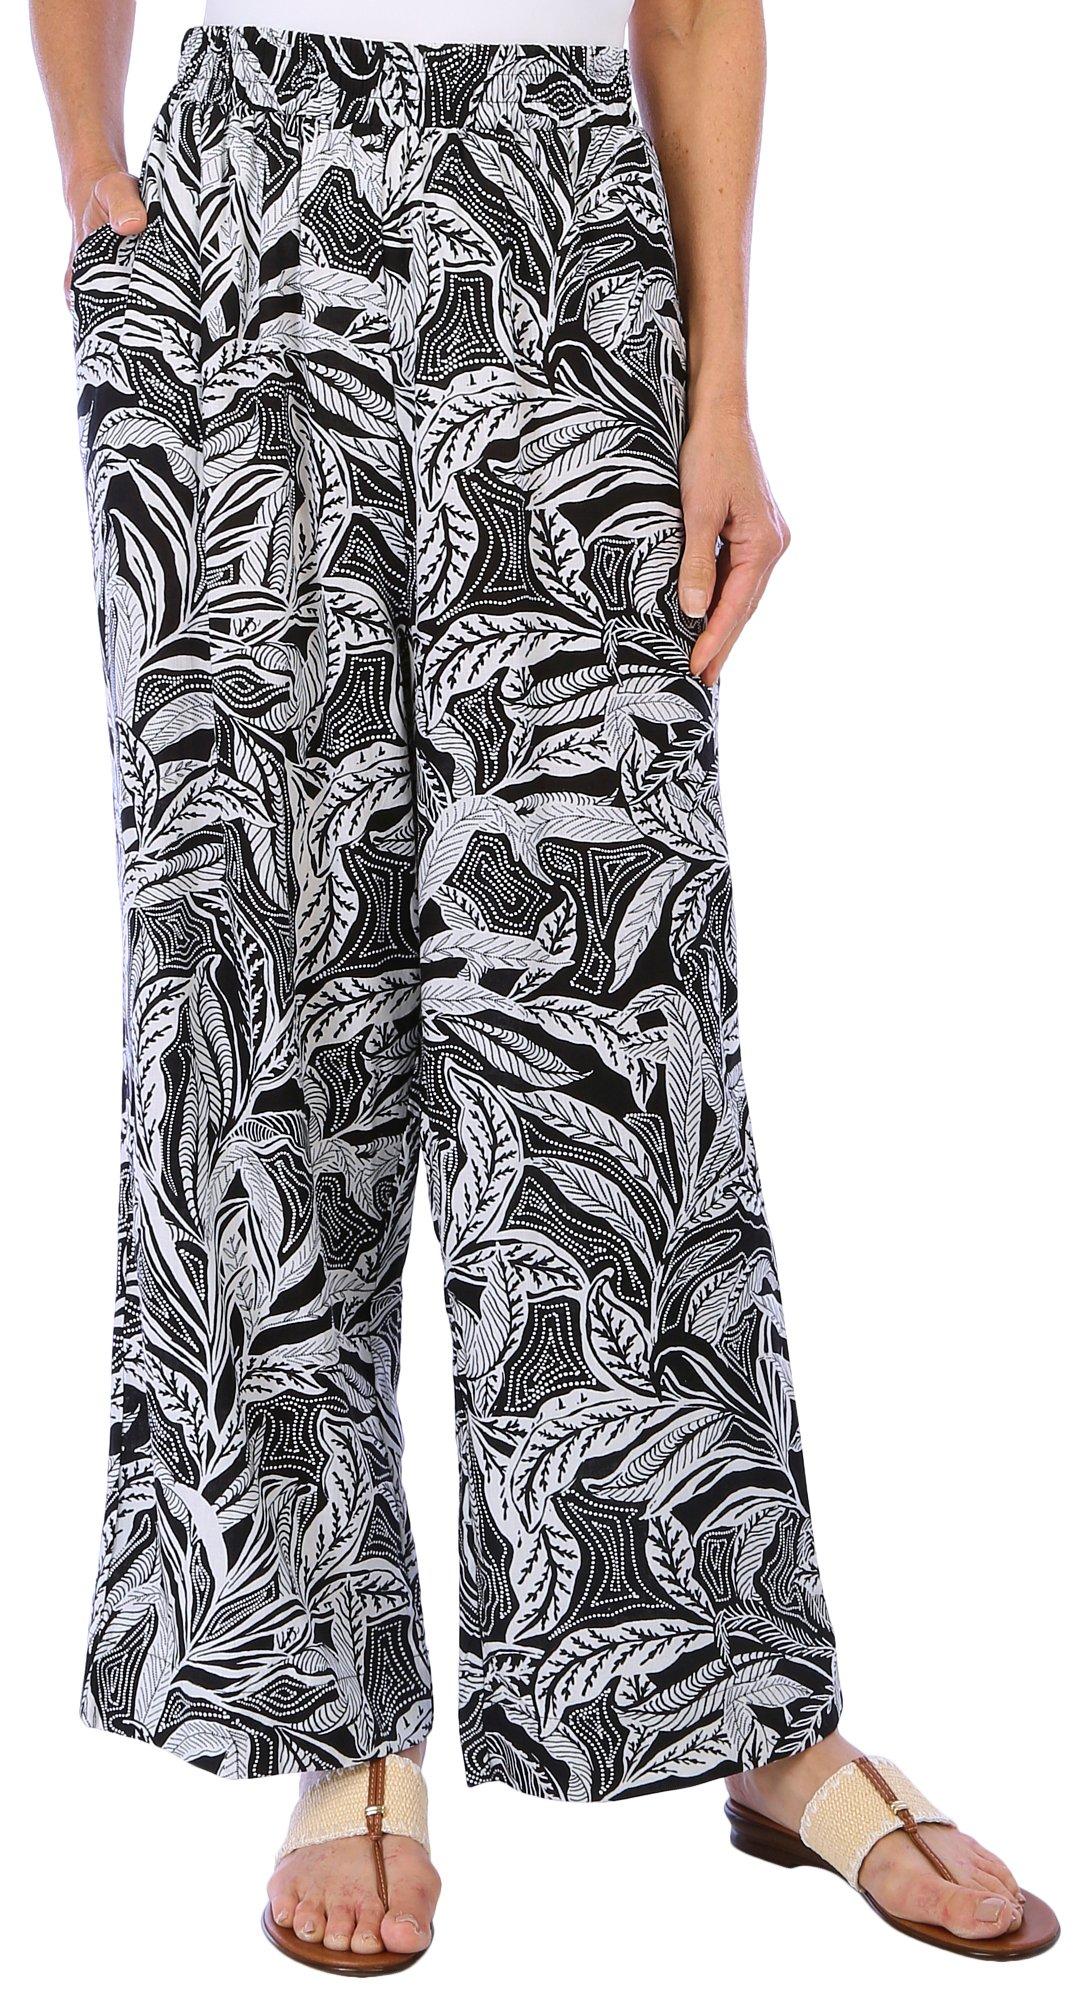 Womens Abstract Print Linen Pants